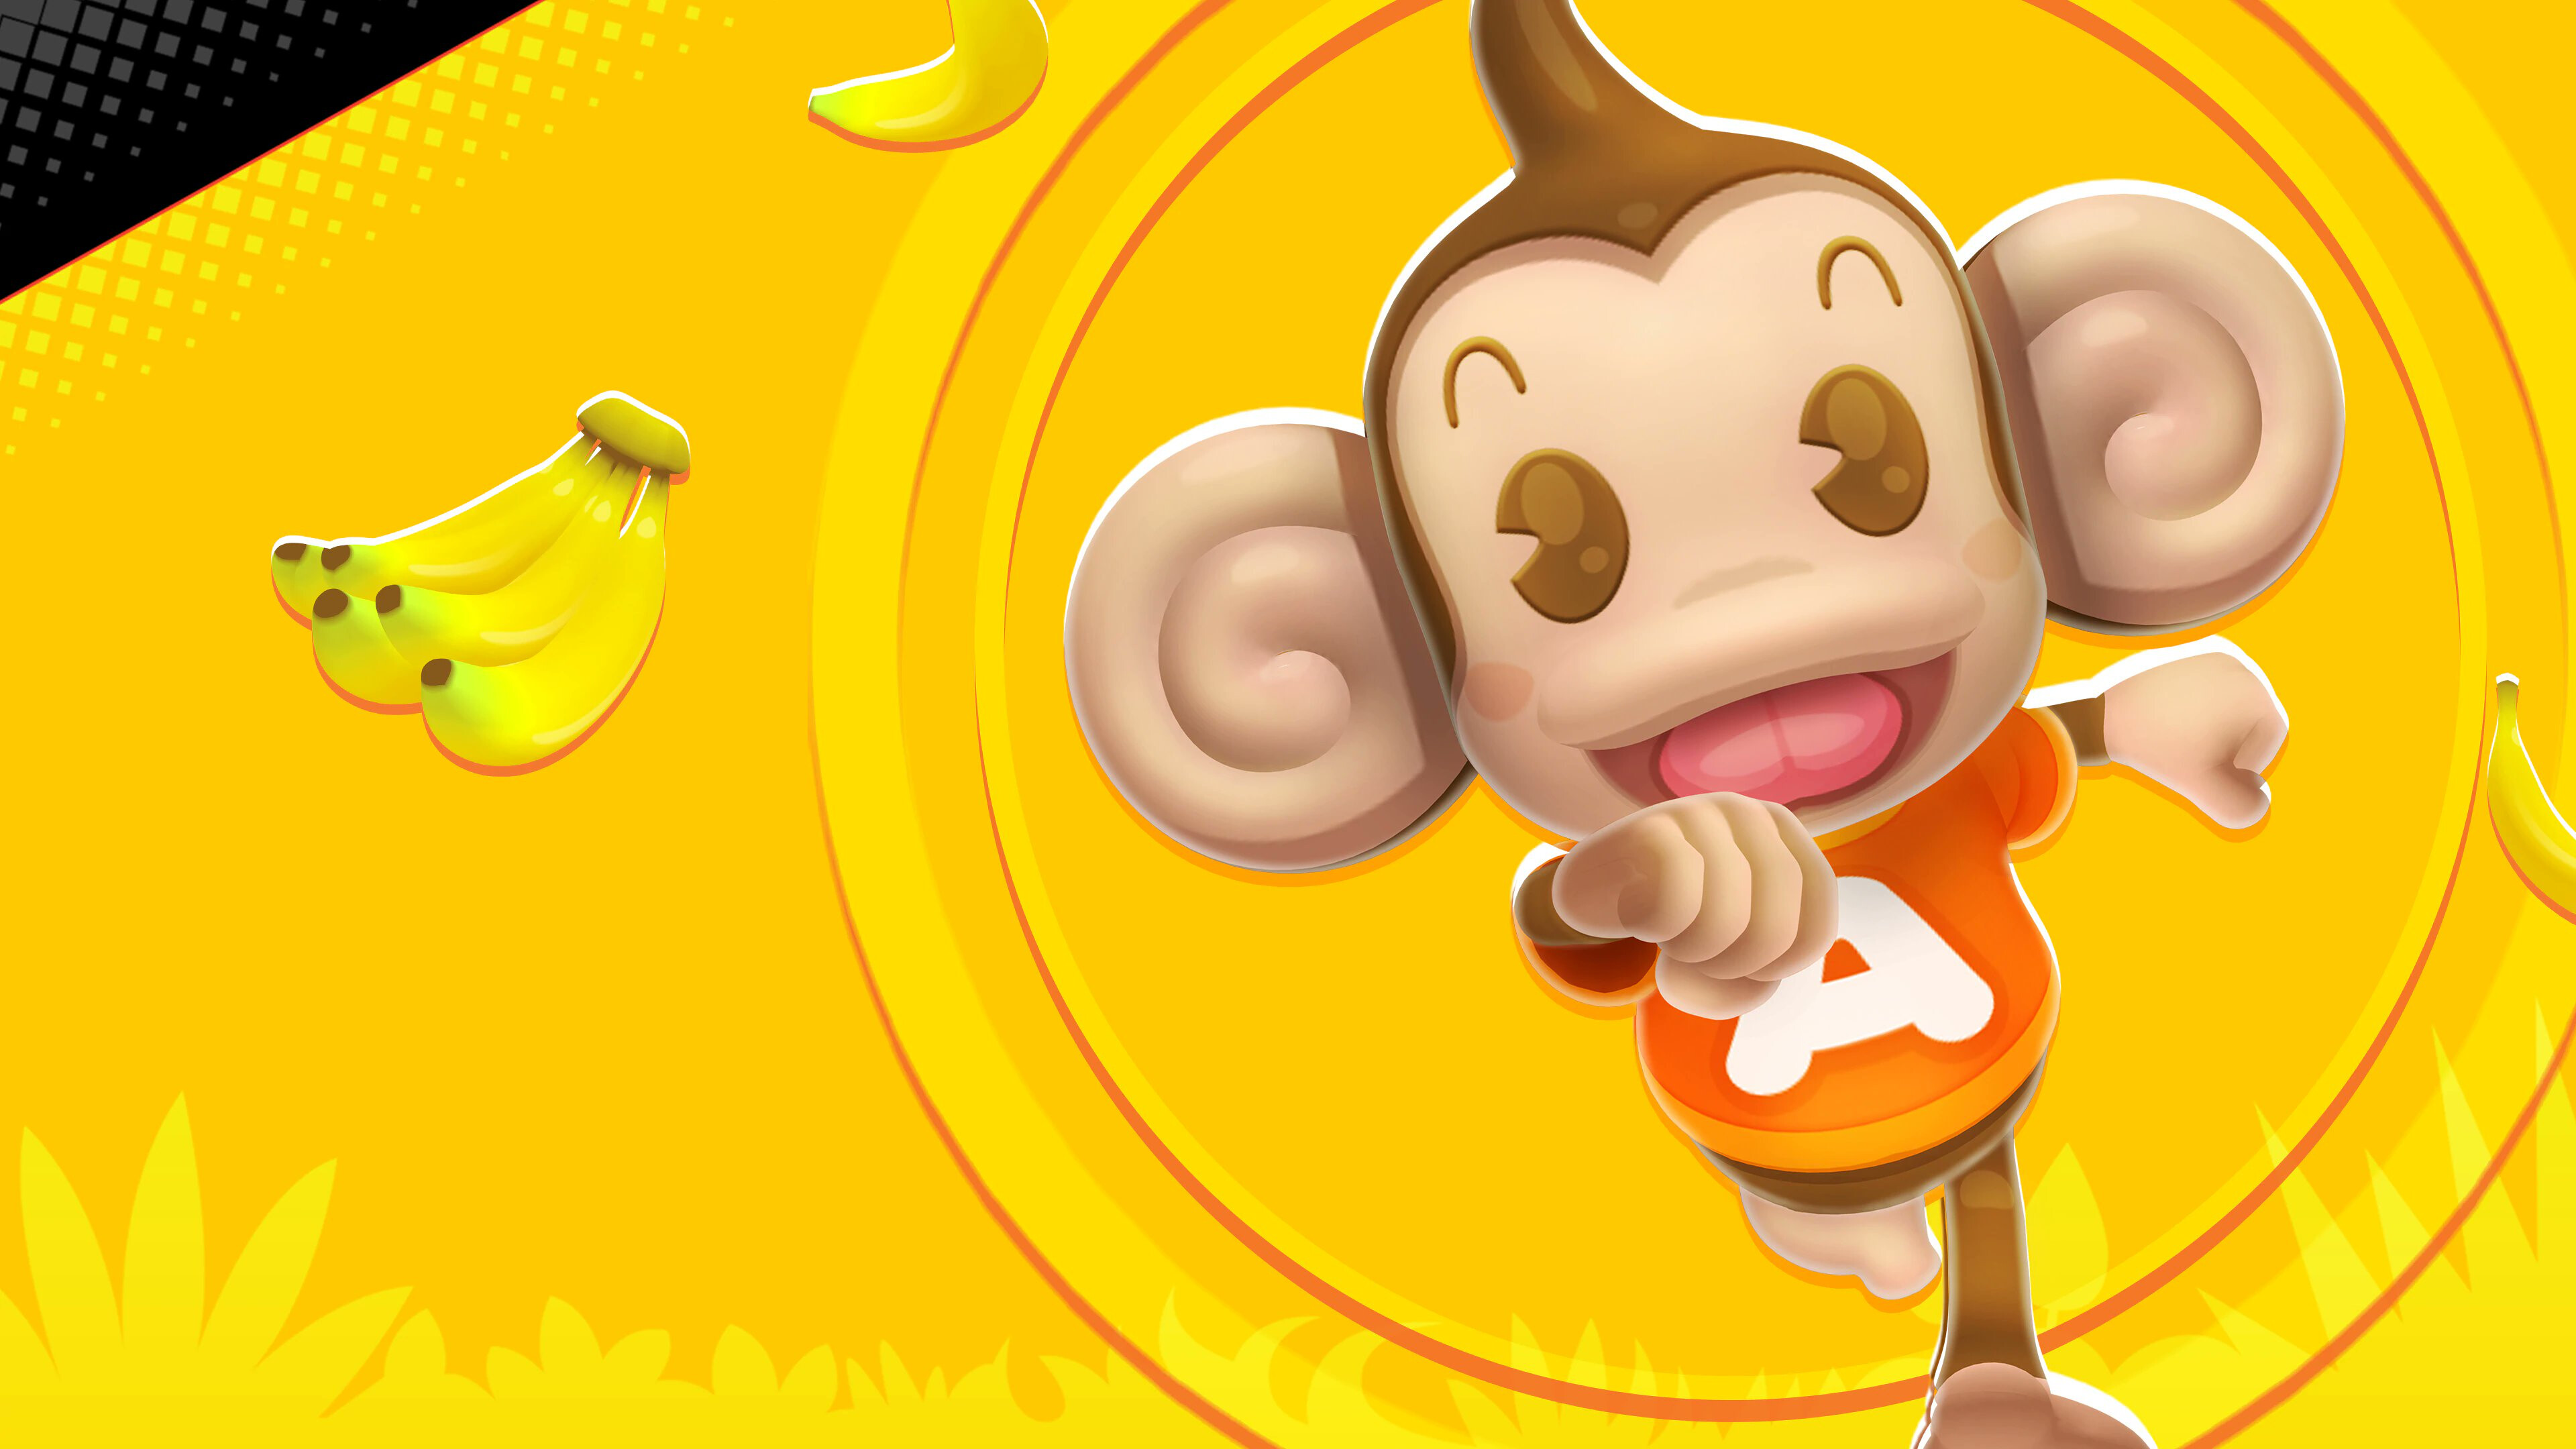 Revisão  Super Monkey Ball Banana Mania - XboxEra